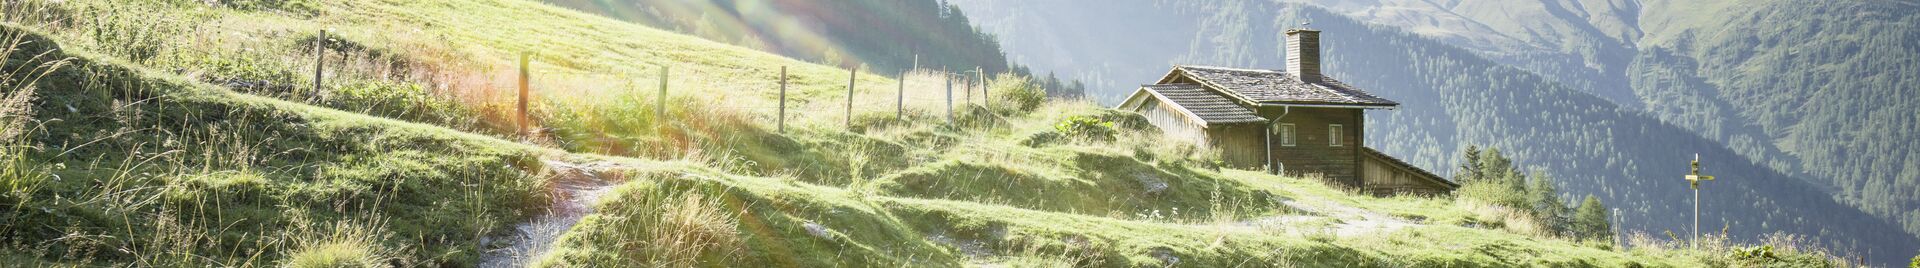 Almhütte im Nationalpark Hohe Tauern, Osttirol